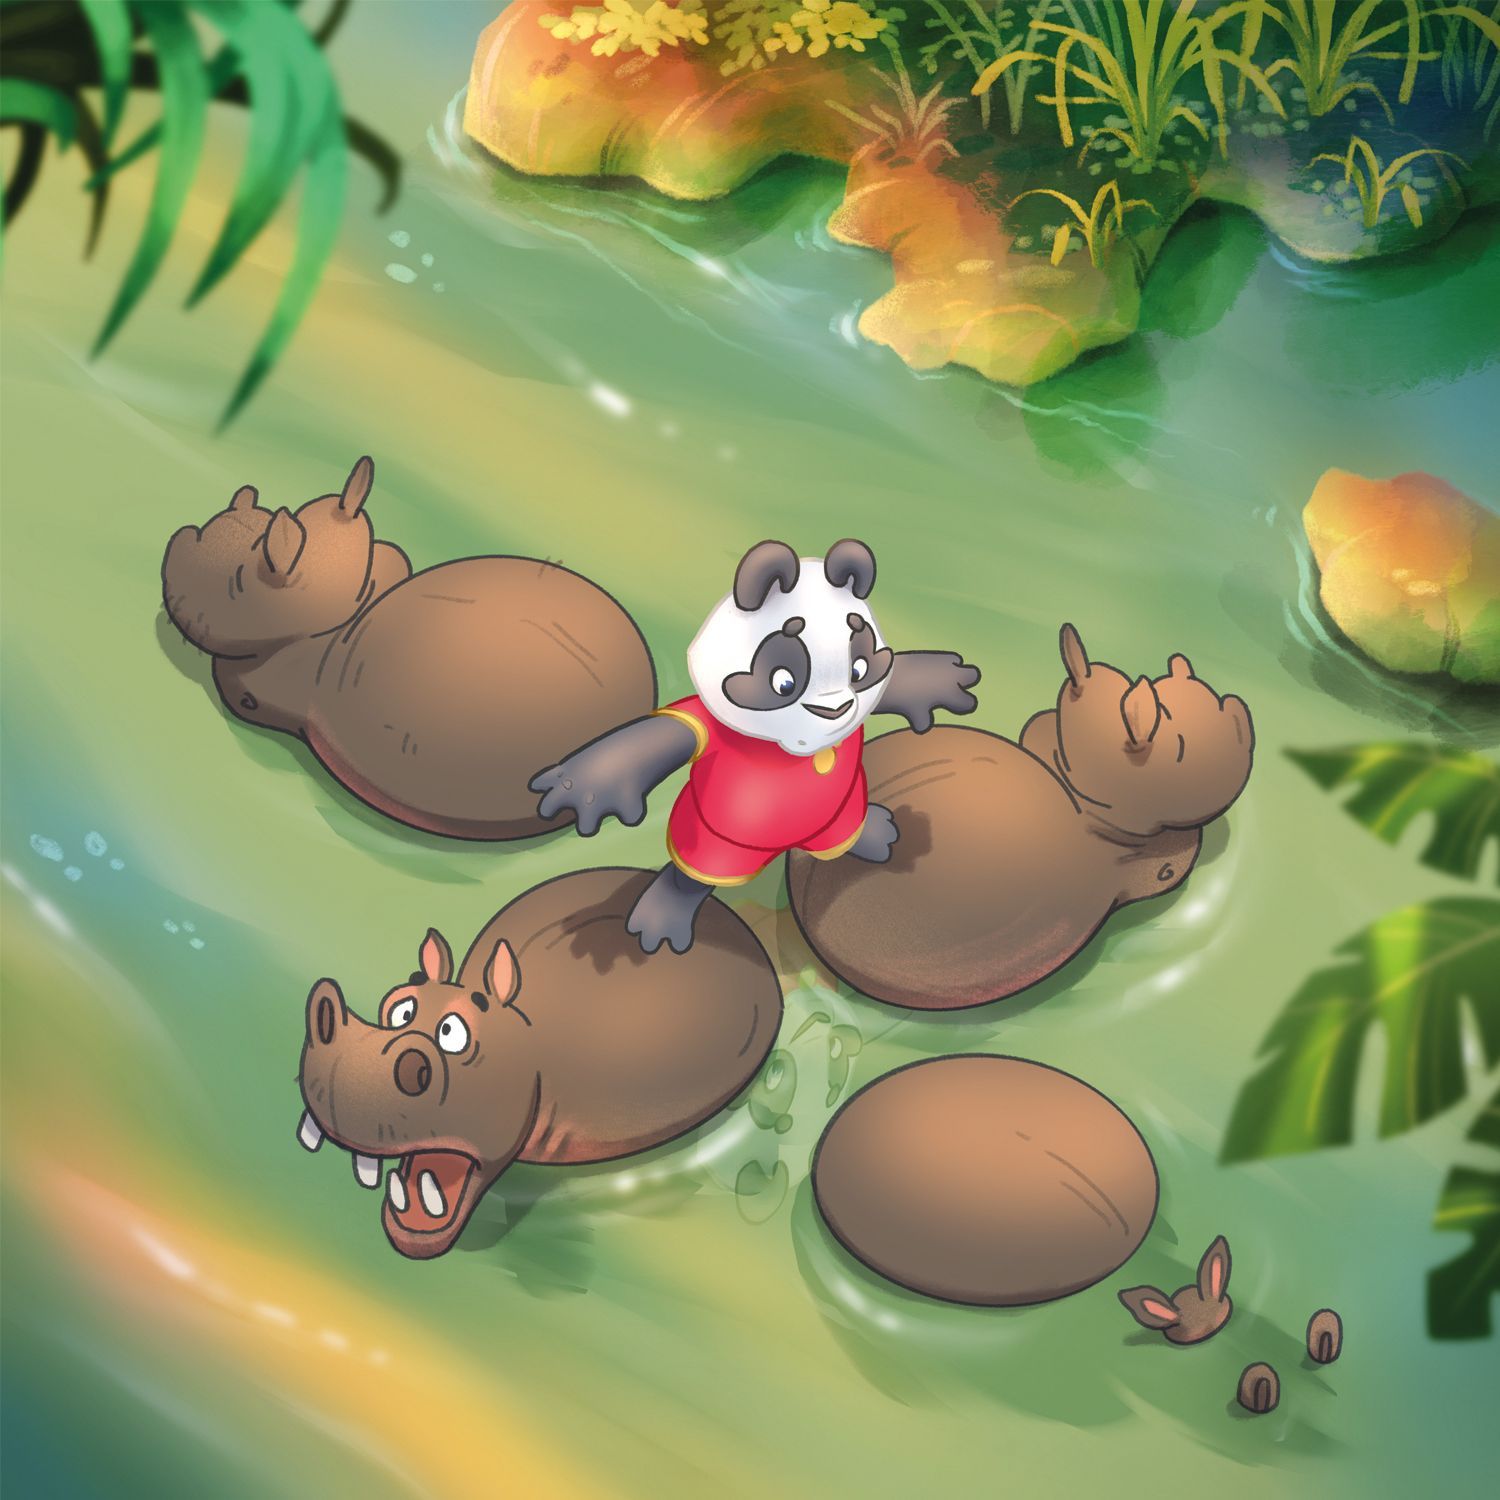 Lets Move Children's book illustrations  Hippo